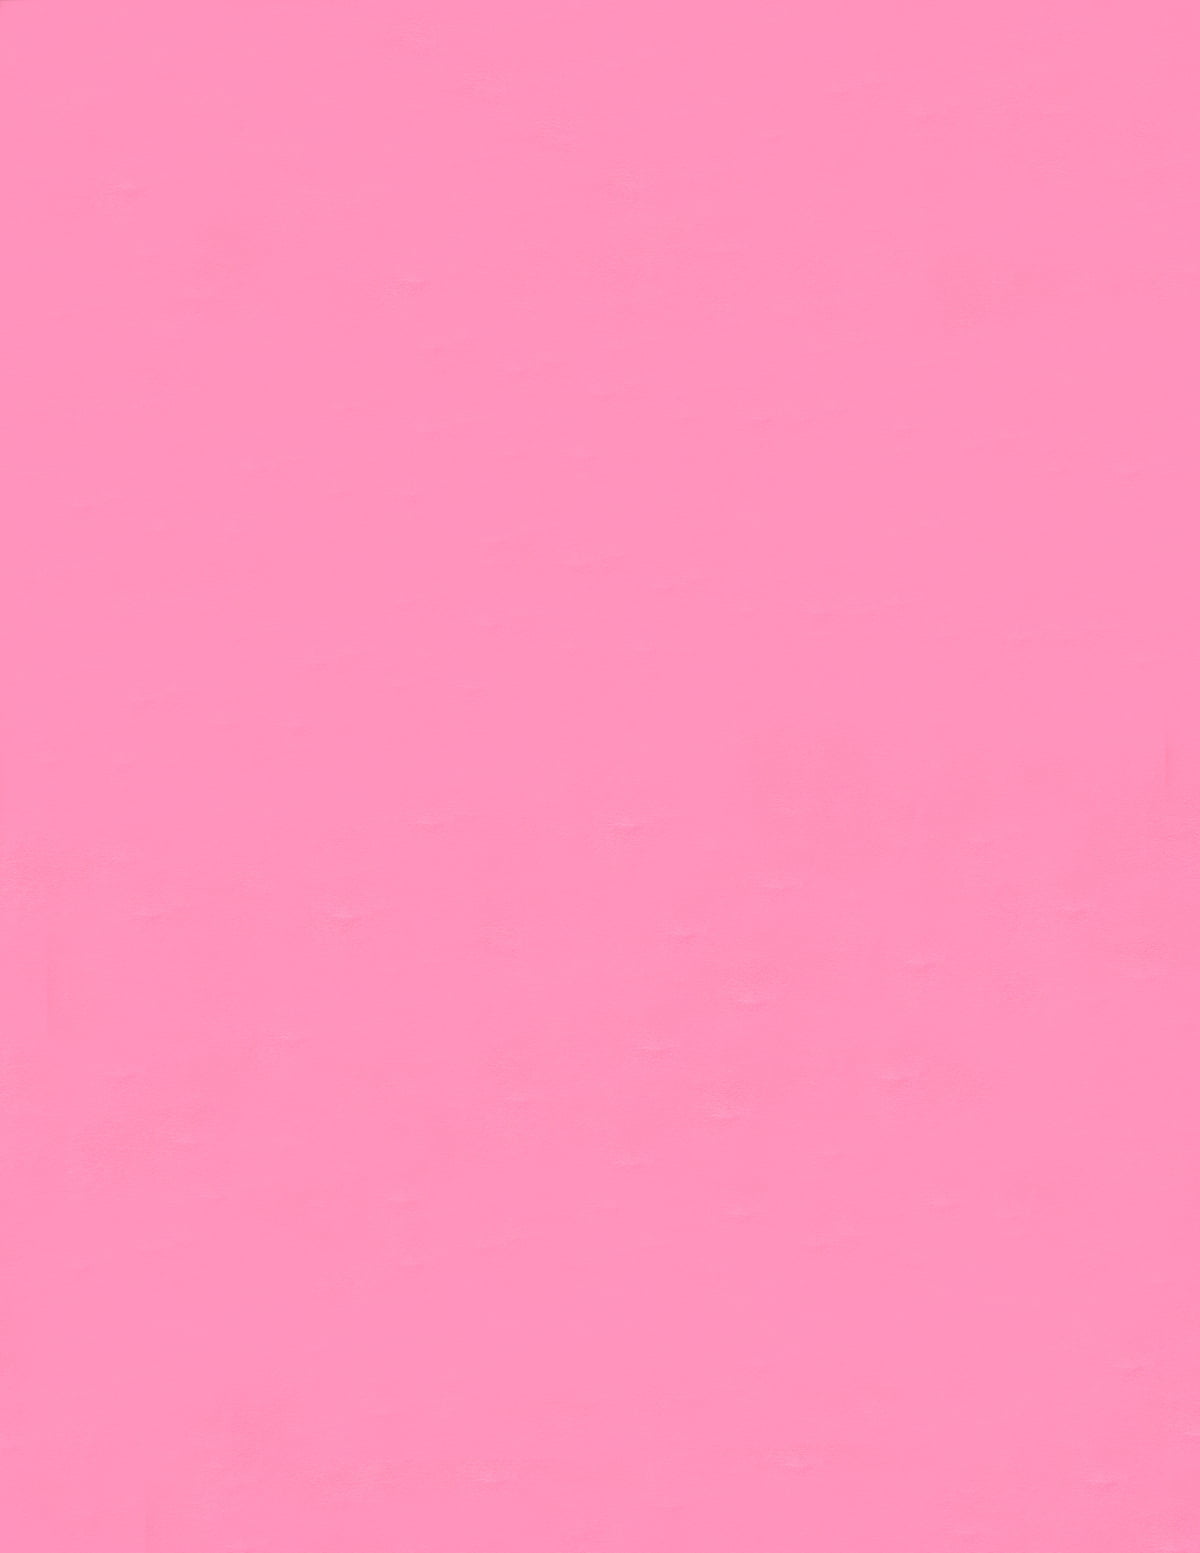 Pink Cardstock - 8.5 x 11 inch - 65Lb Cover - Walmart.com